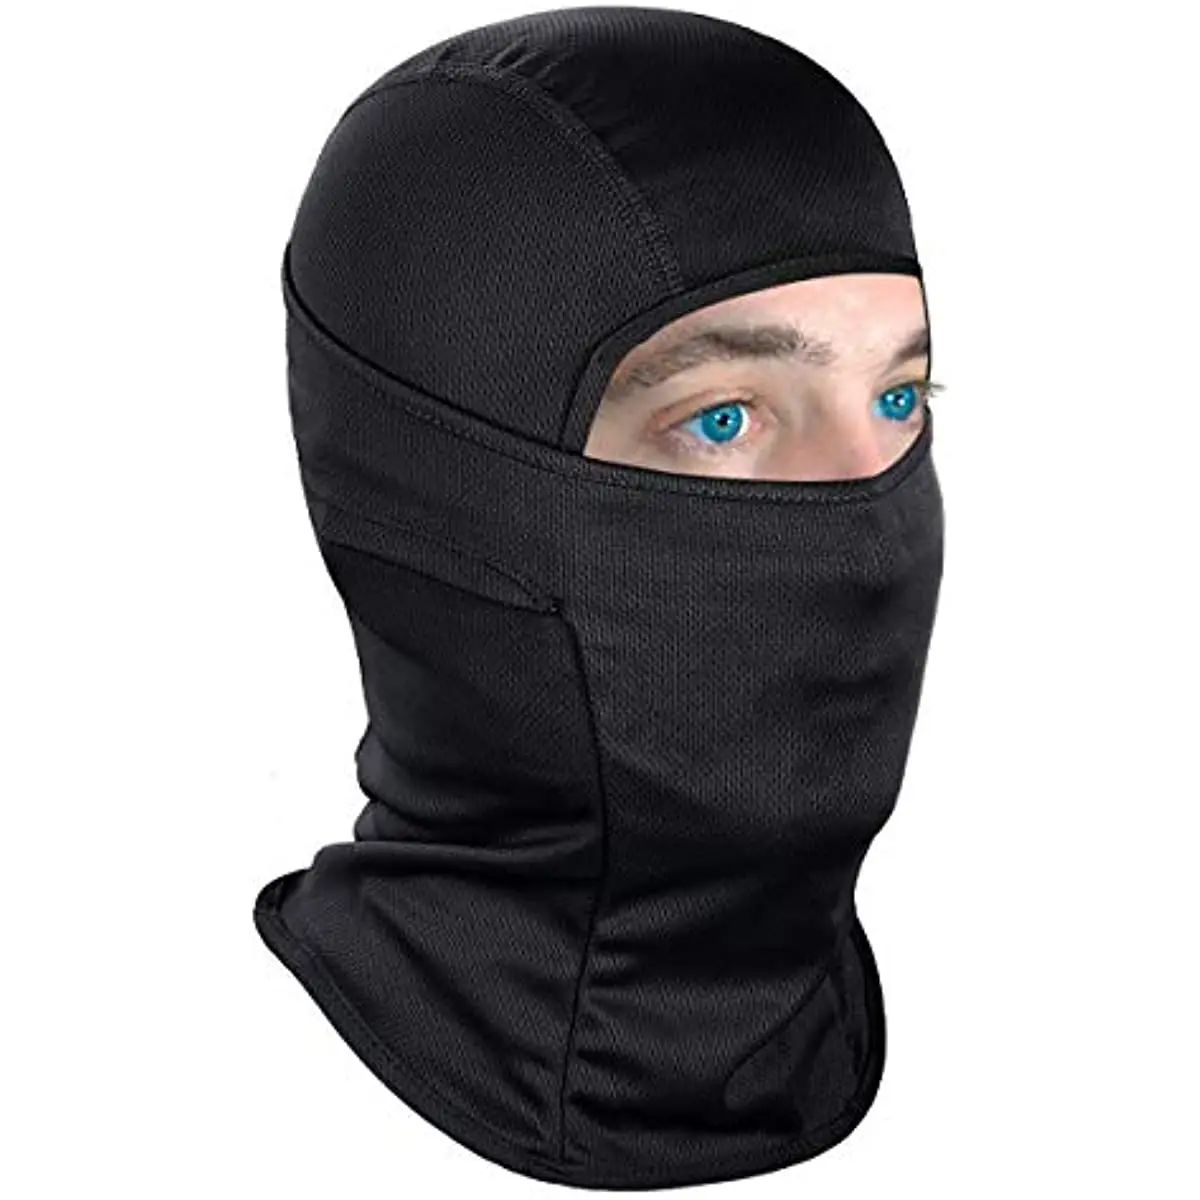 Accessories, Nike Drip Dri Fit Balaclava Ski Mask Shiesty Face Mask Cap Hat